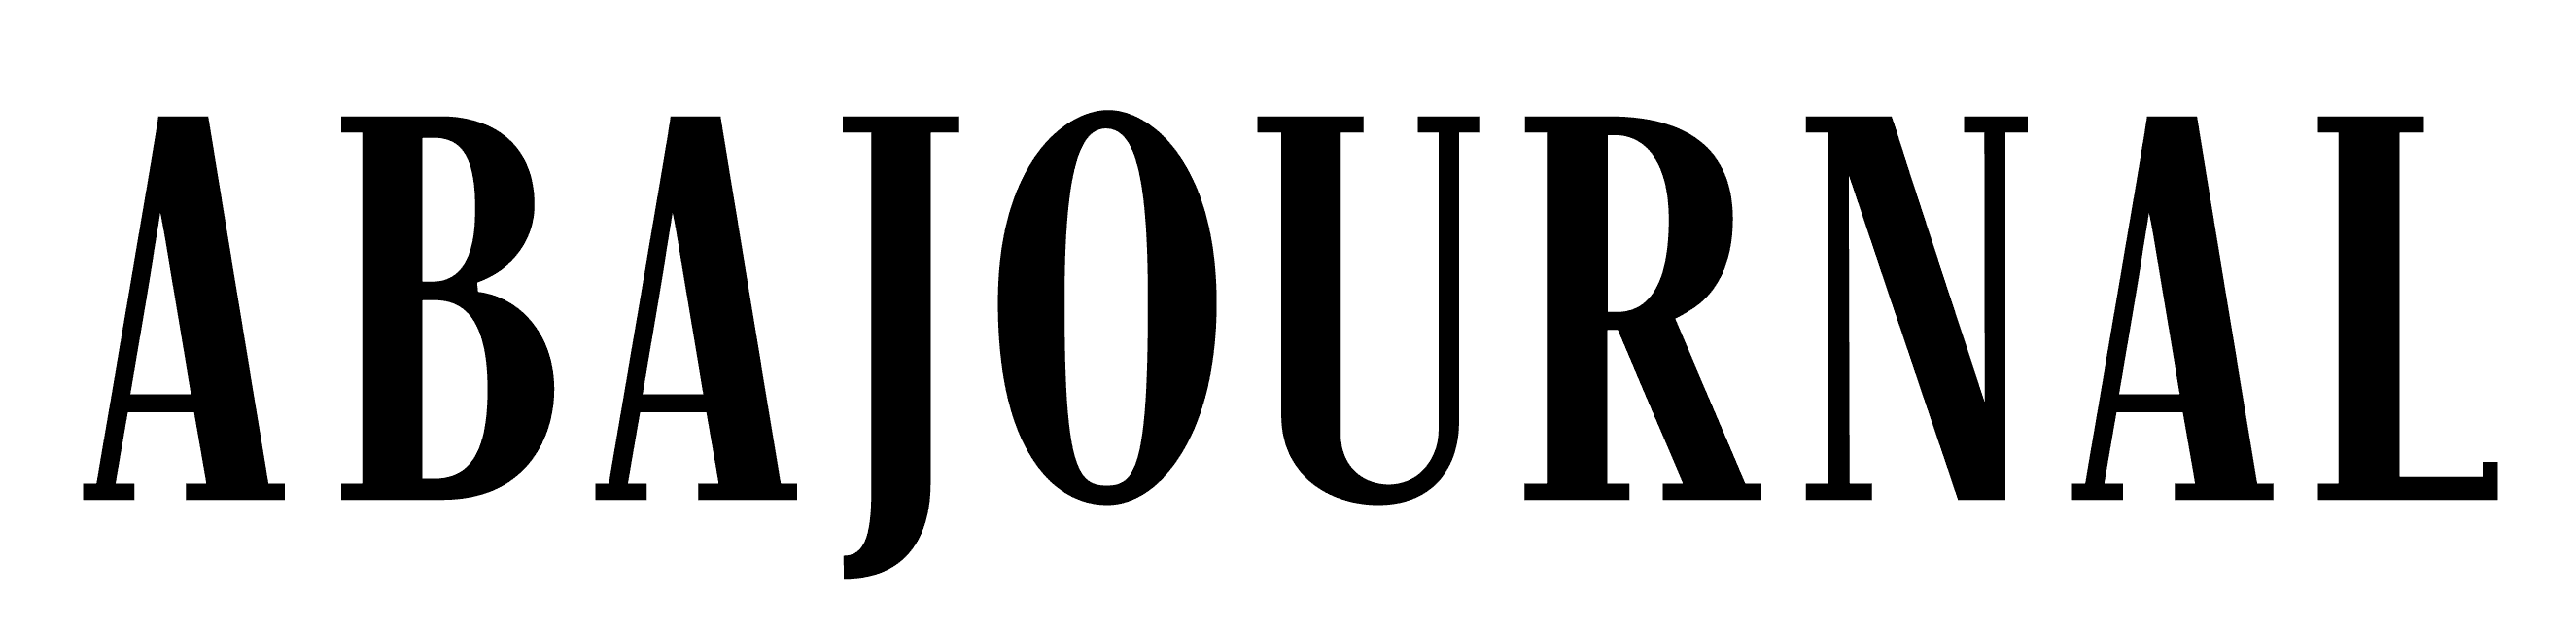 Abajournal logo